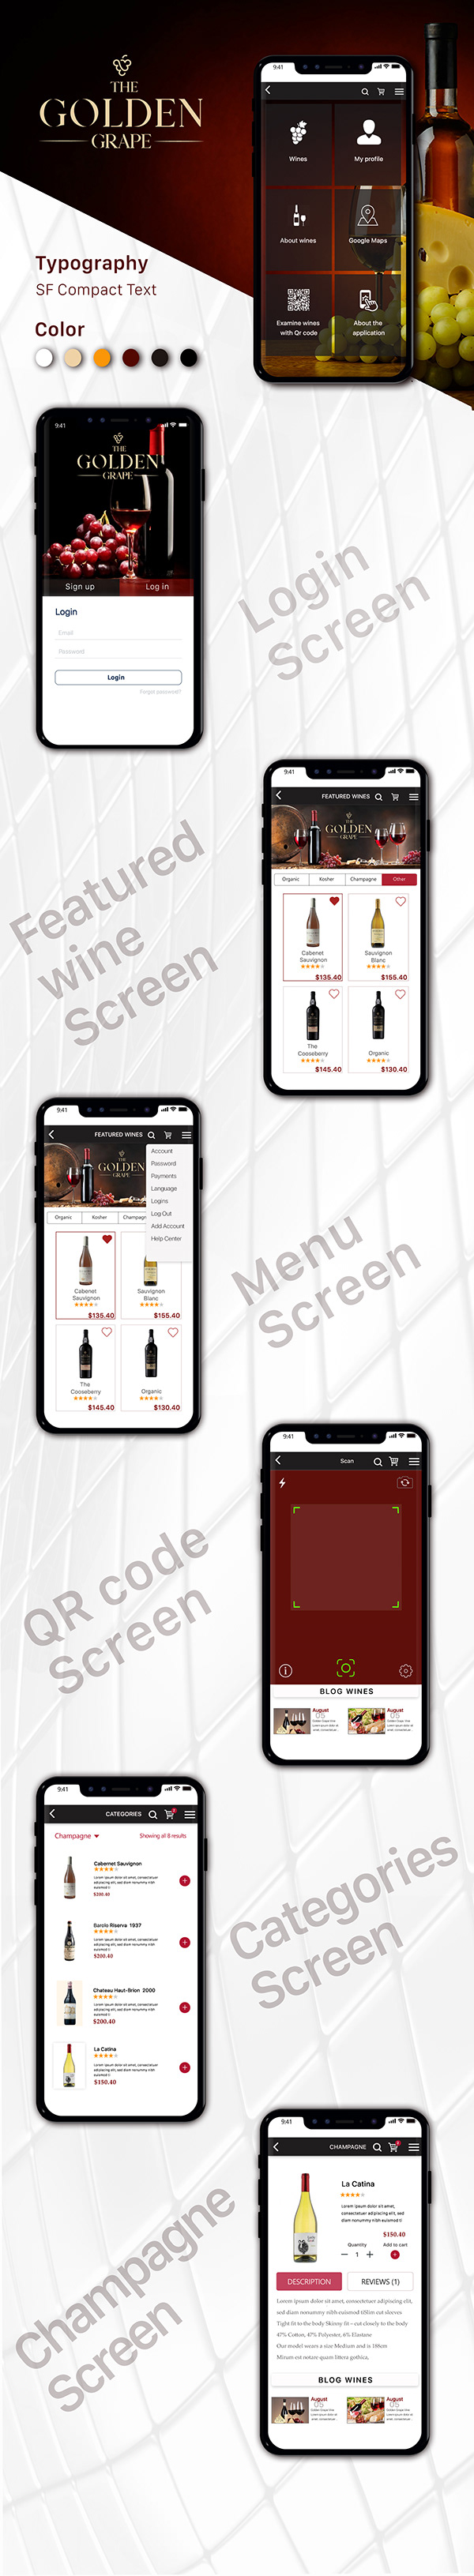 The Golden Grape mobile application